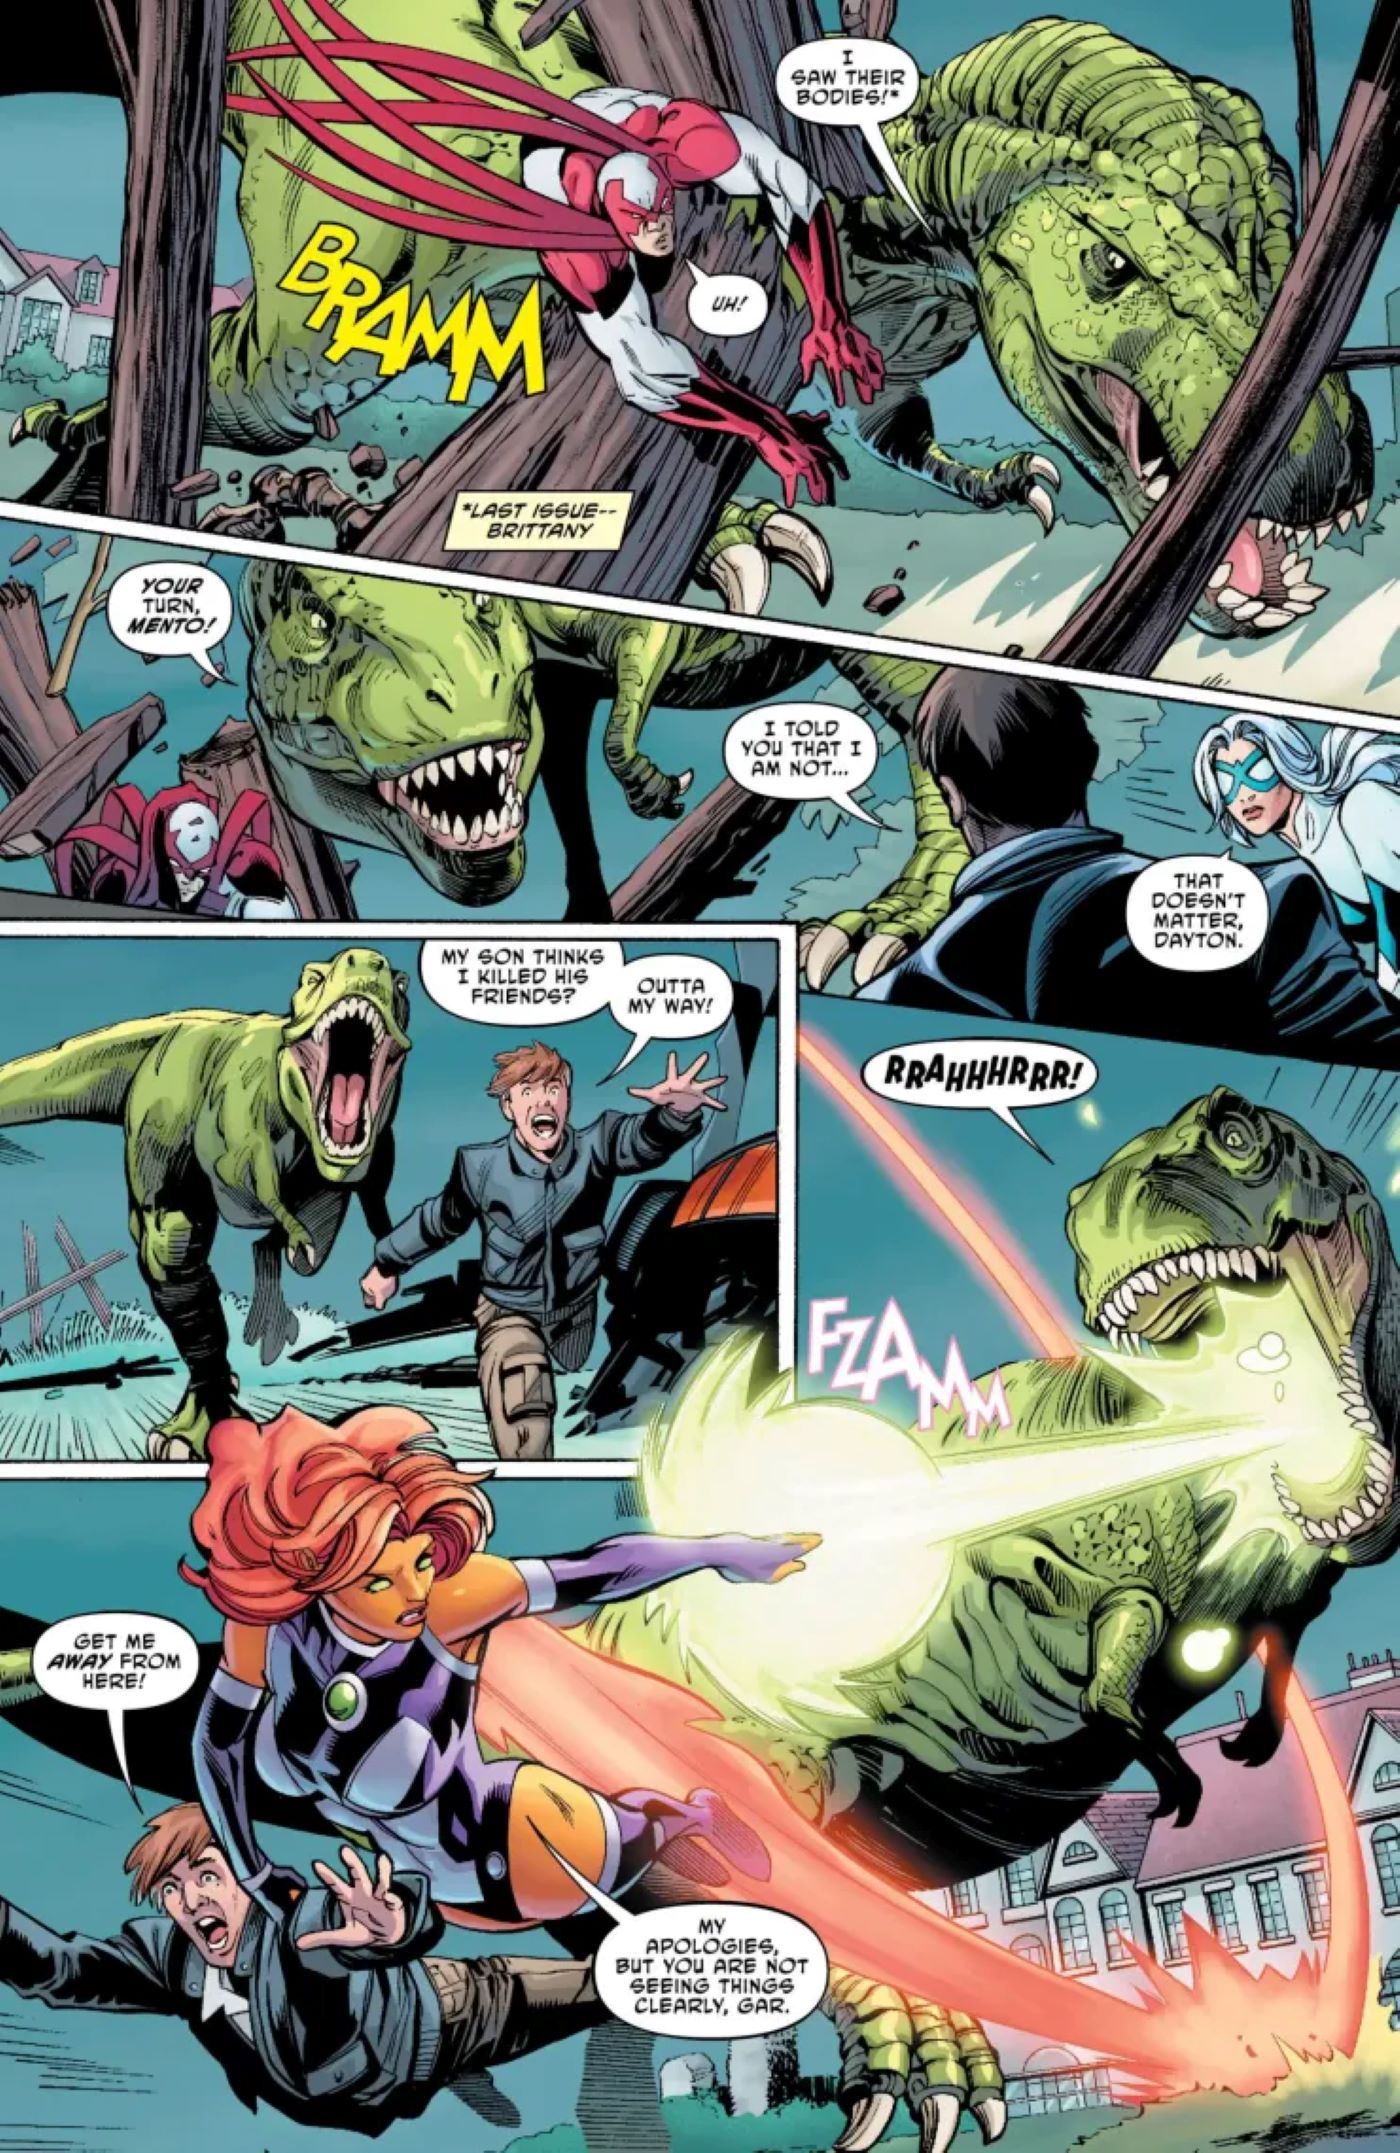 T-Rex Beast Boy attacks the Teen Titans in Titans Burning Rage #6